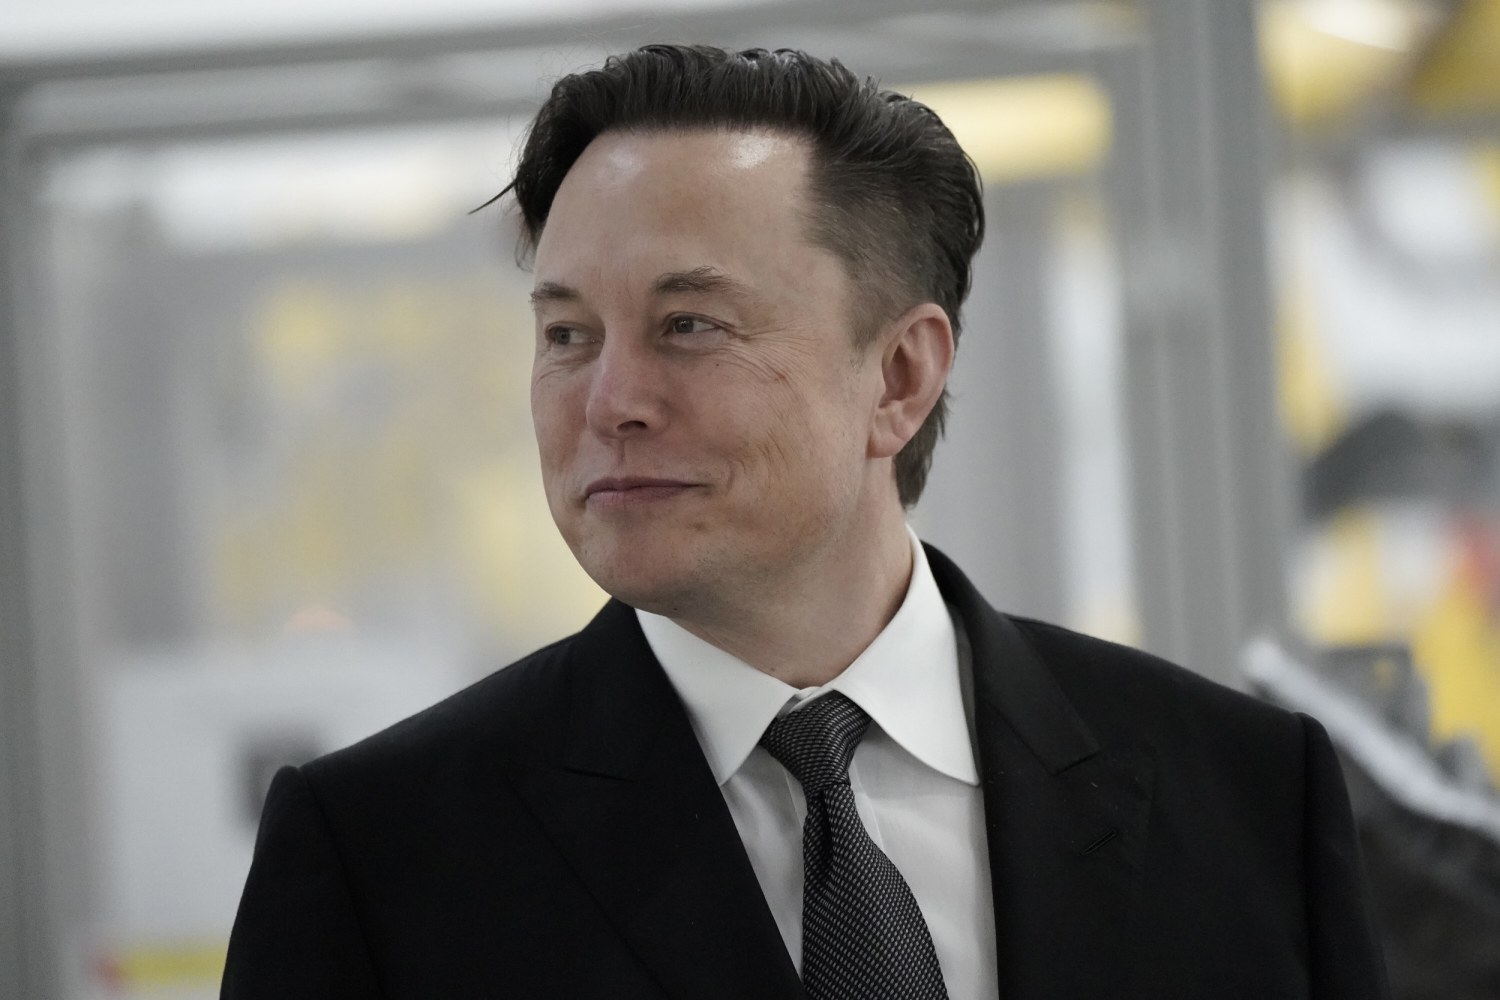 Elon Musk says he's secured $46.5 billion in financing to buy Twitter